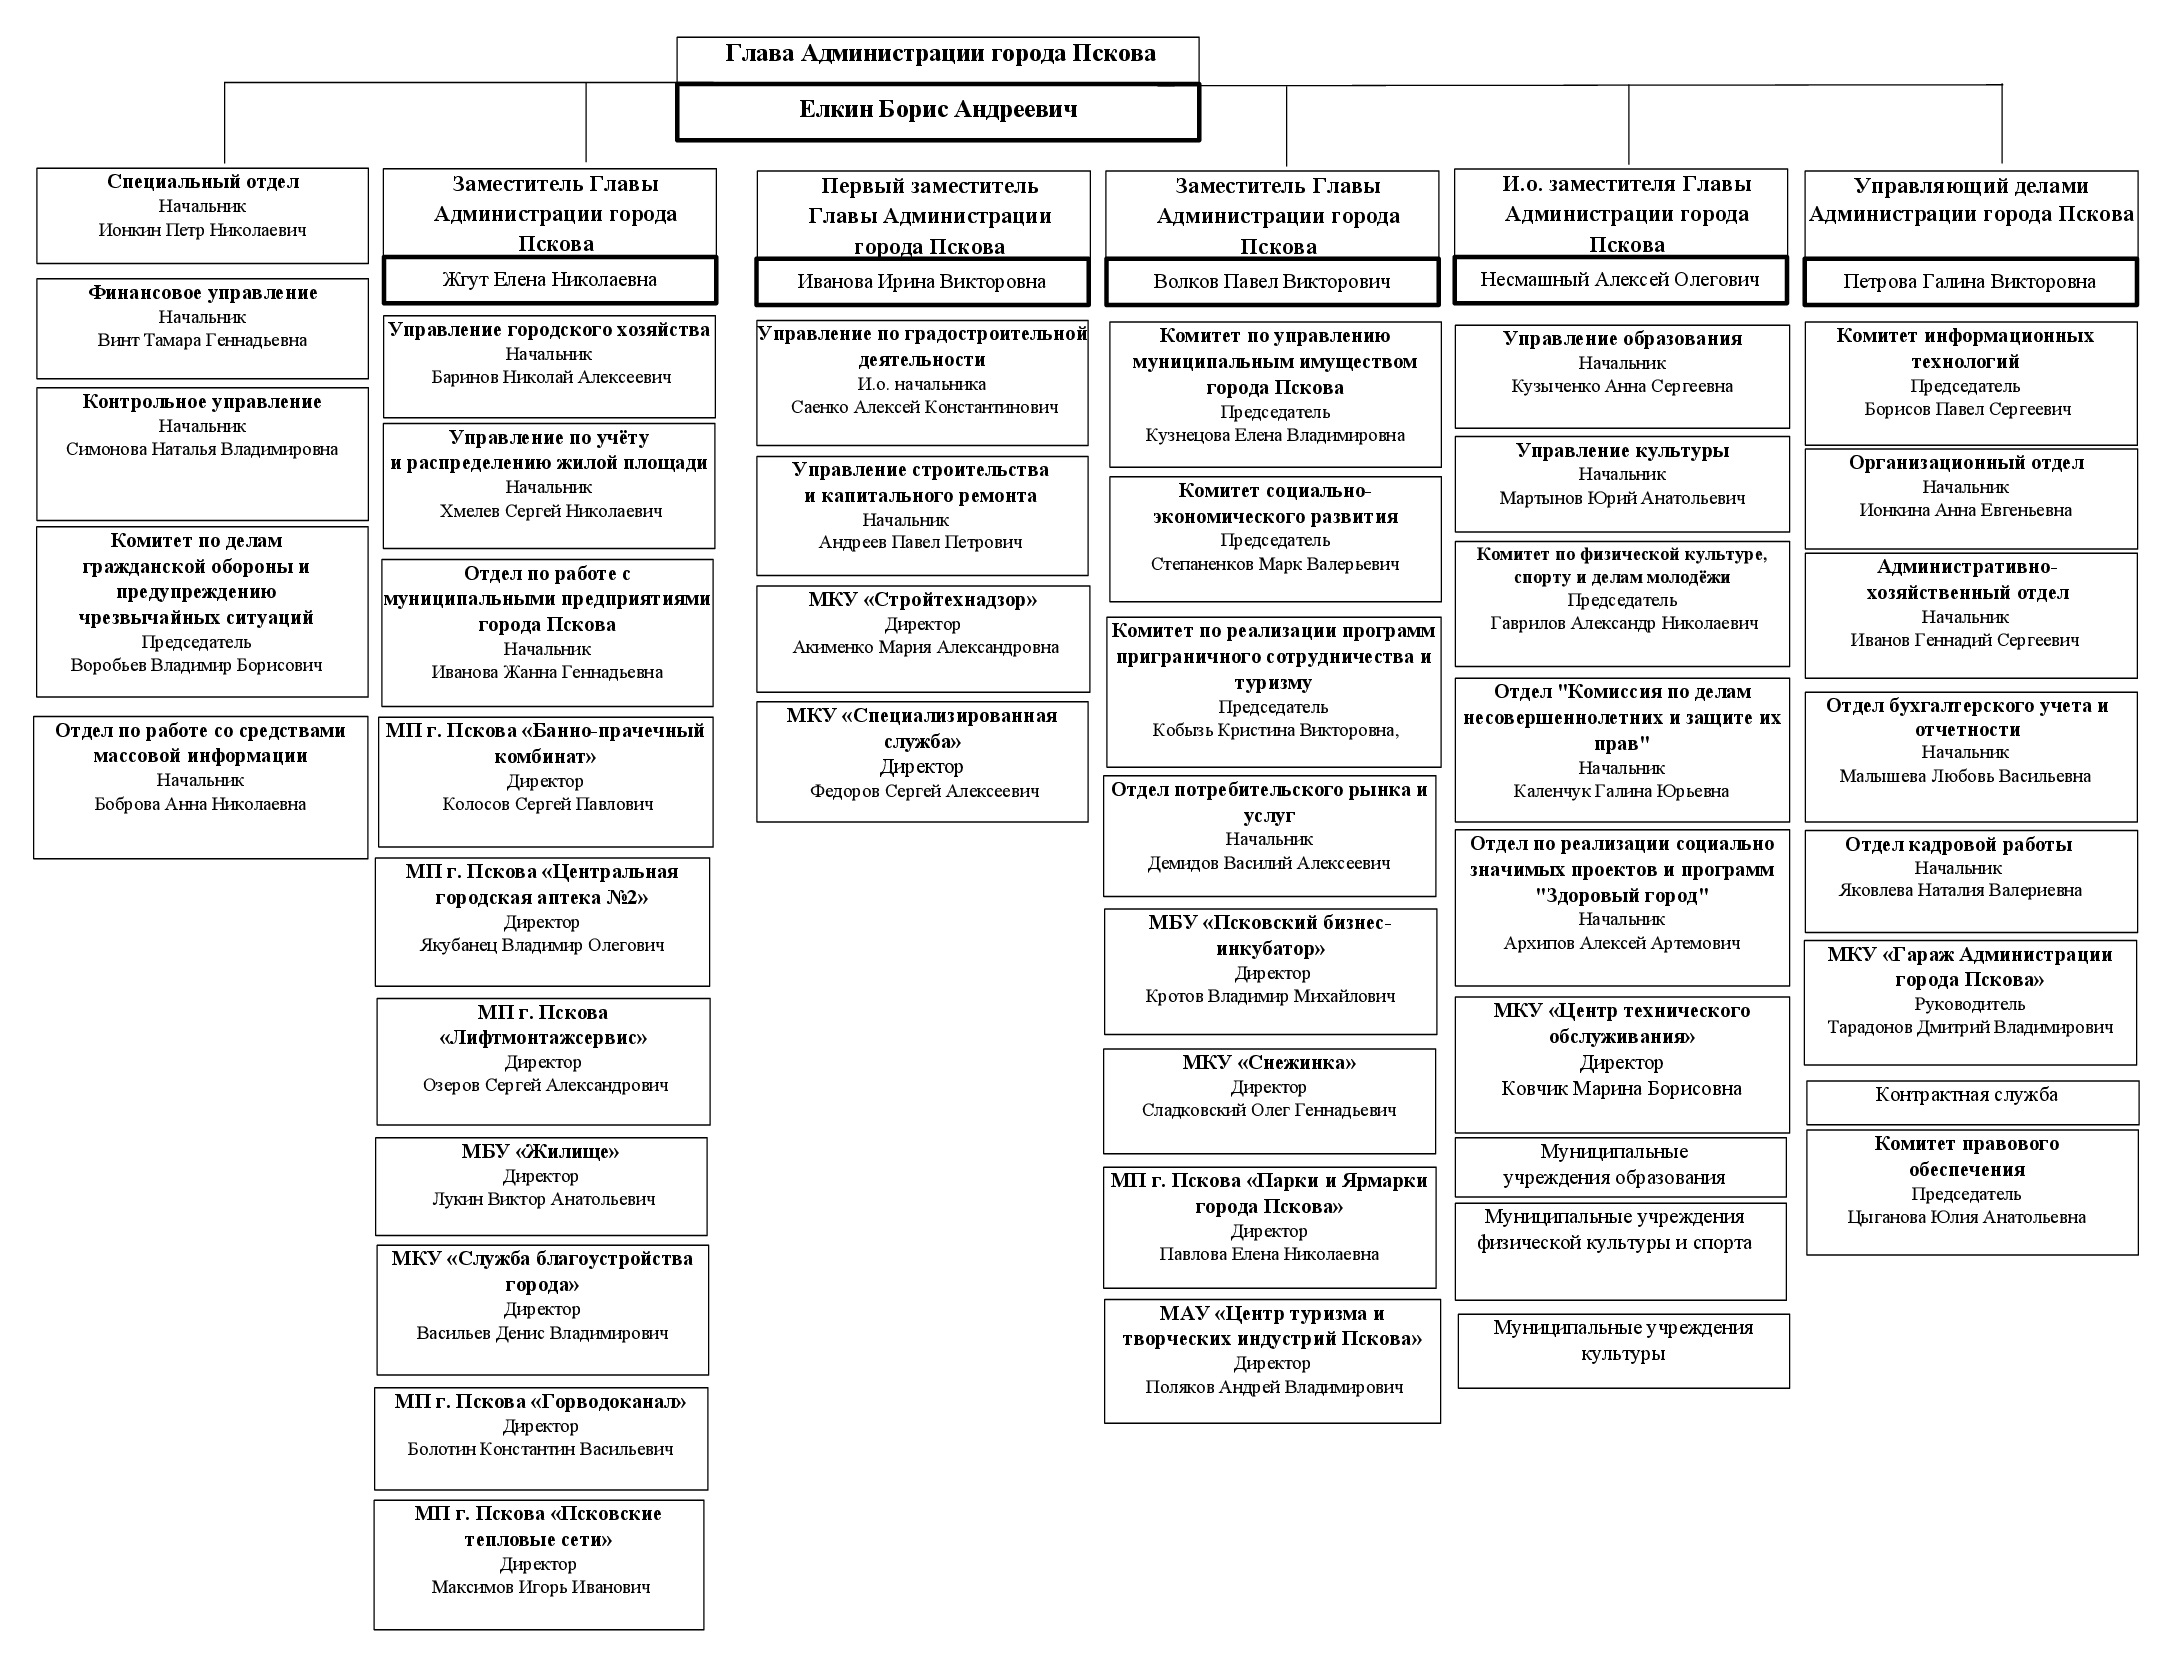 Структура администрации Сочи схема